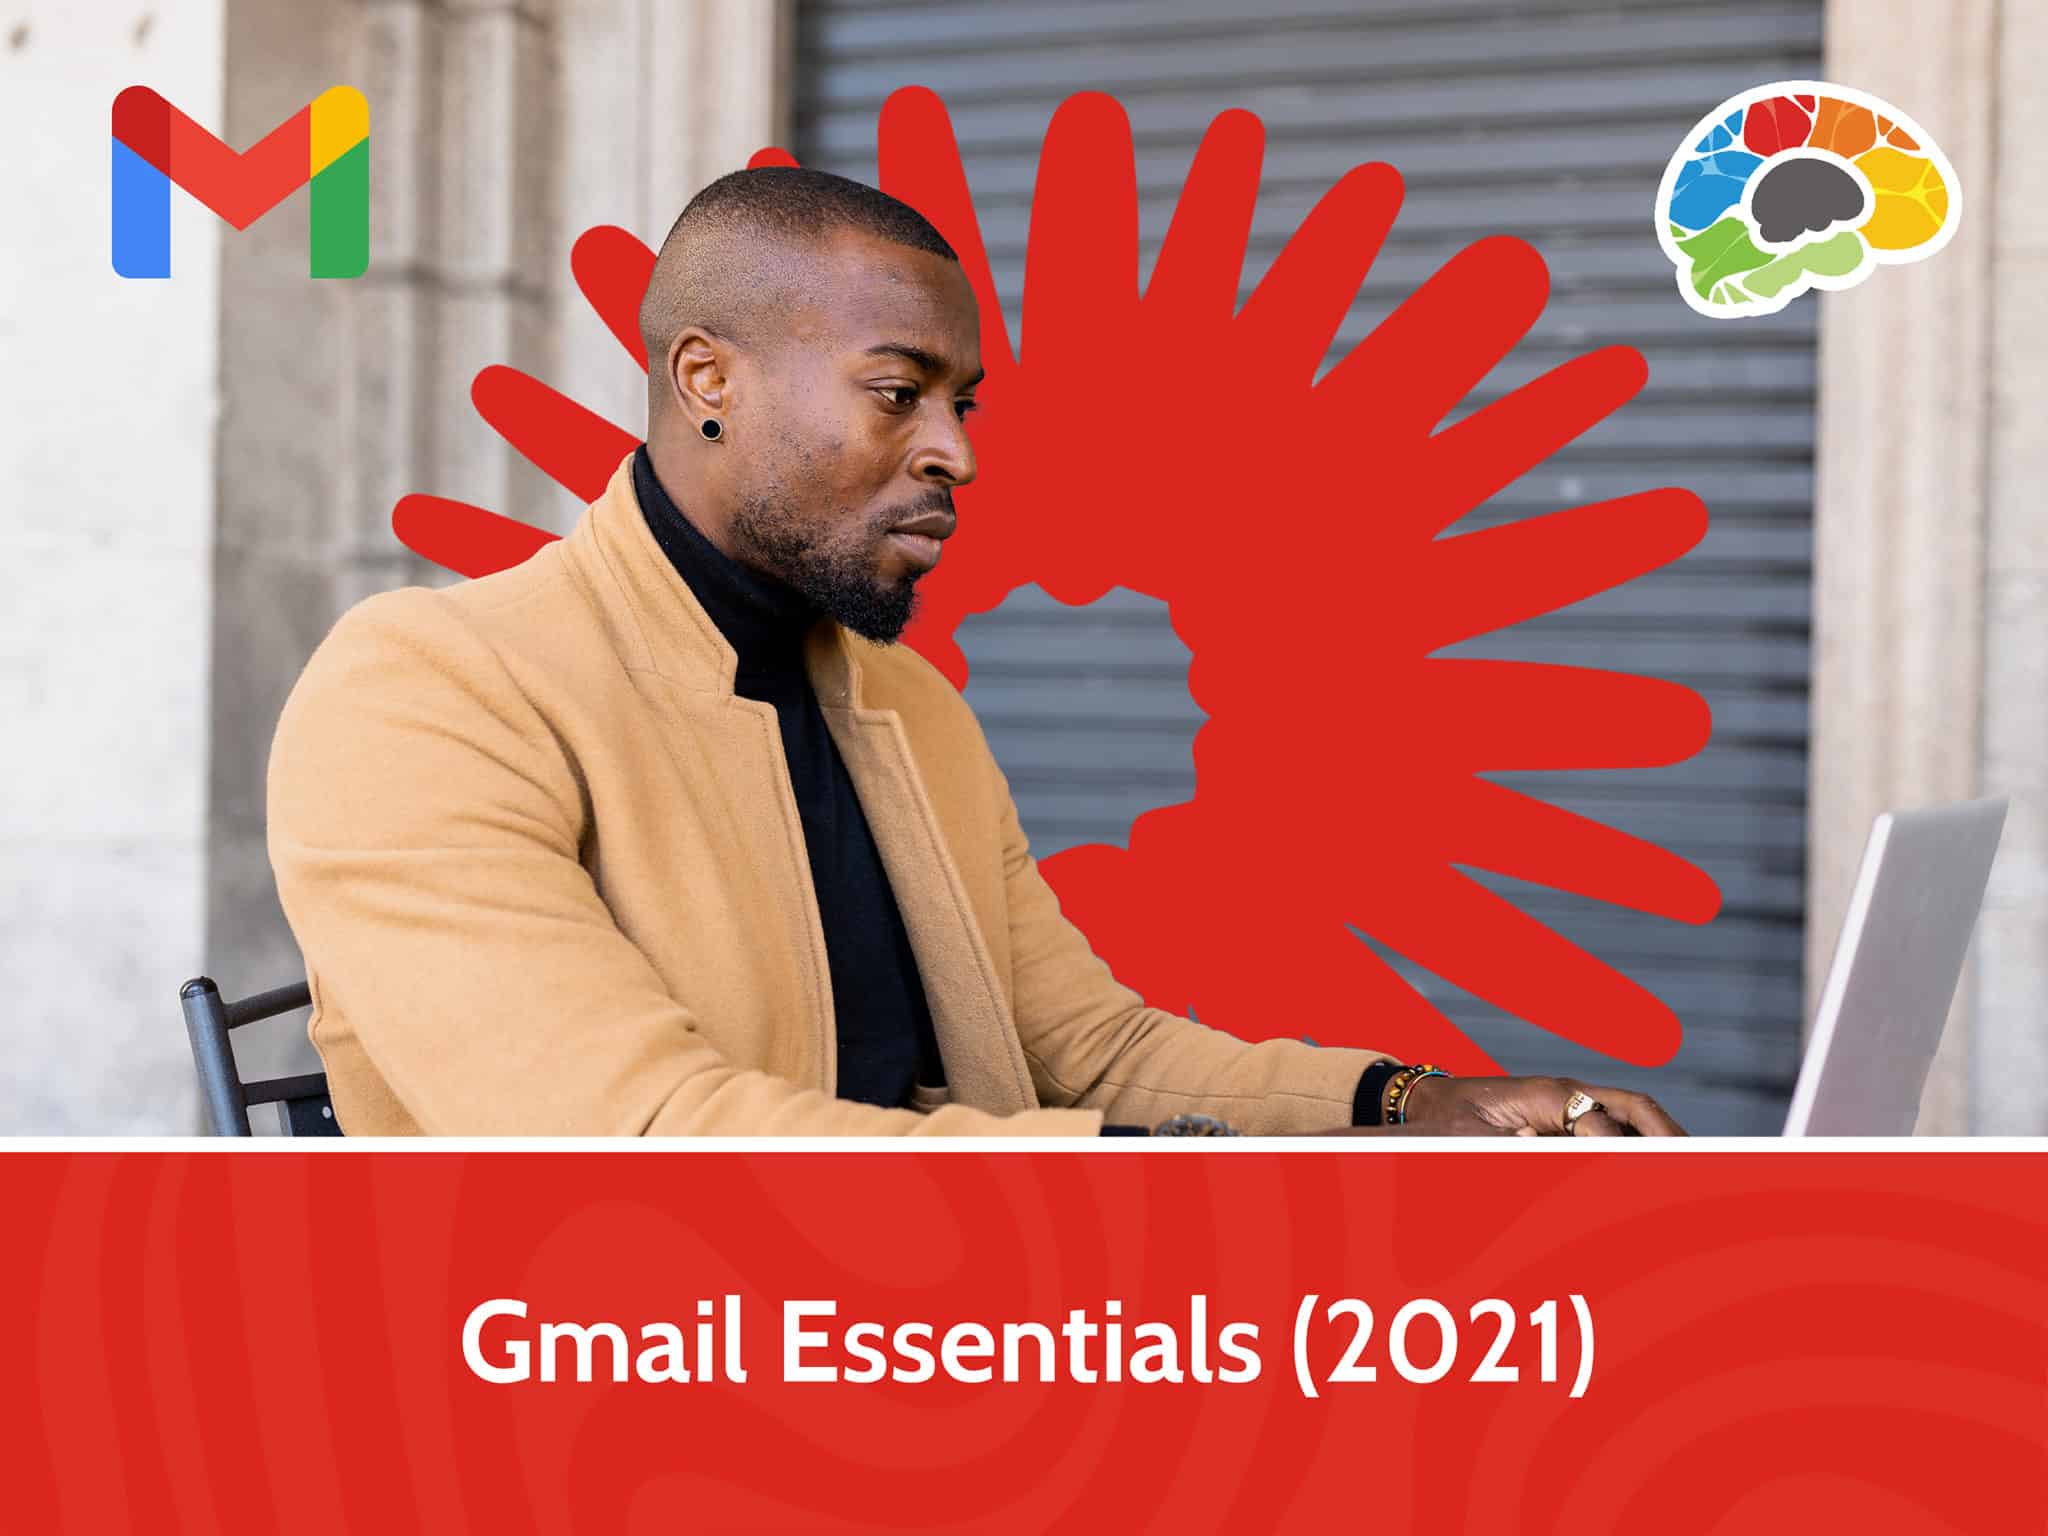 Gmail Essentials 2021 scaled